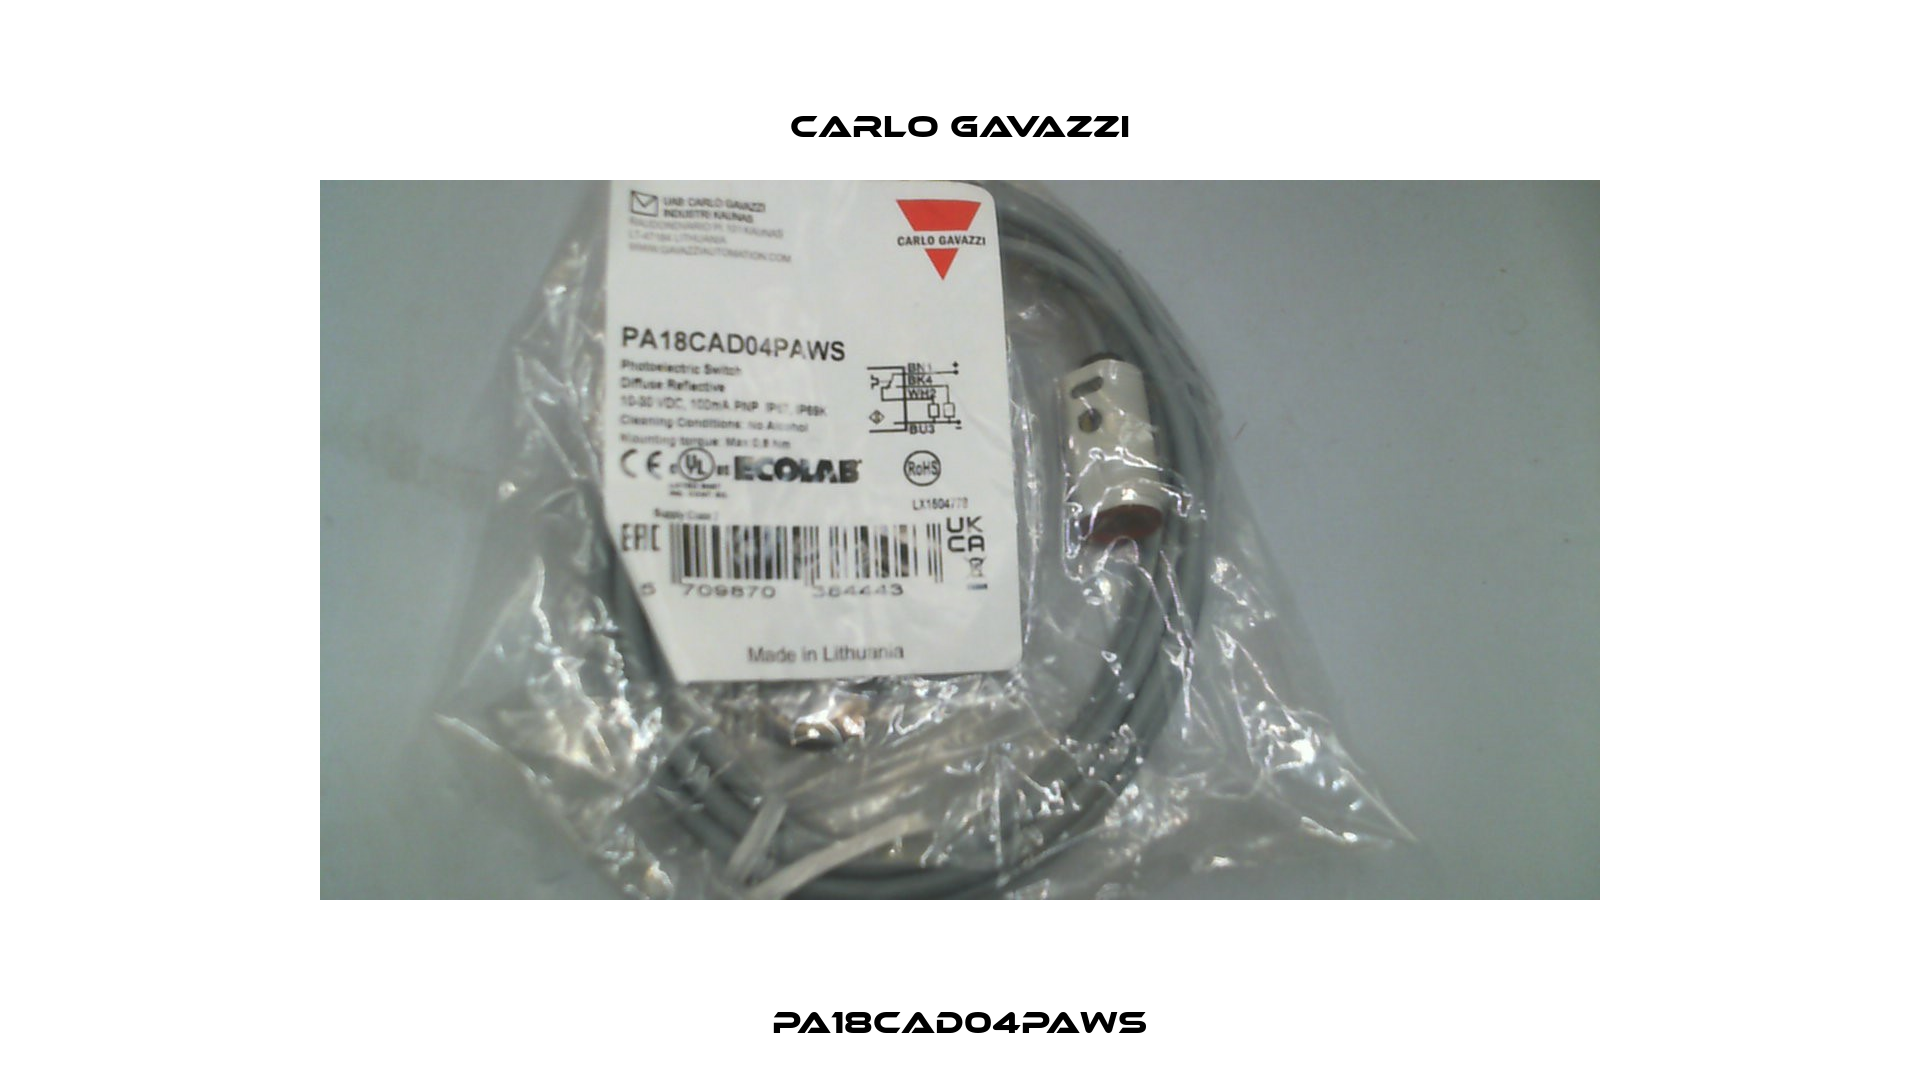 PA18CAD04PAWS Carlo Gavazzi